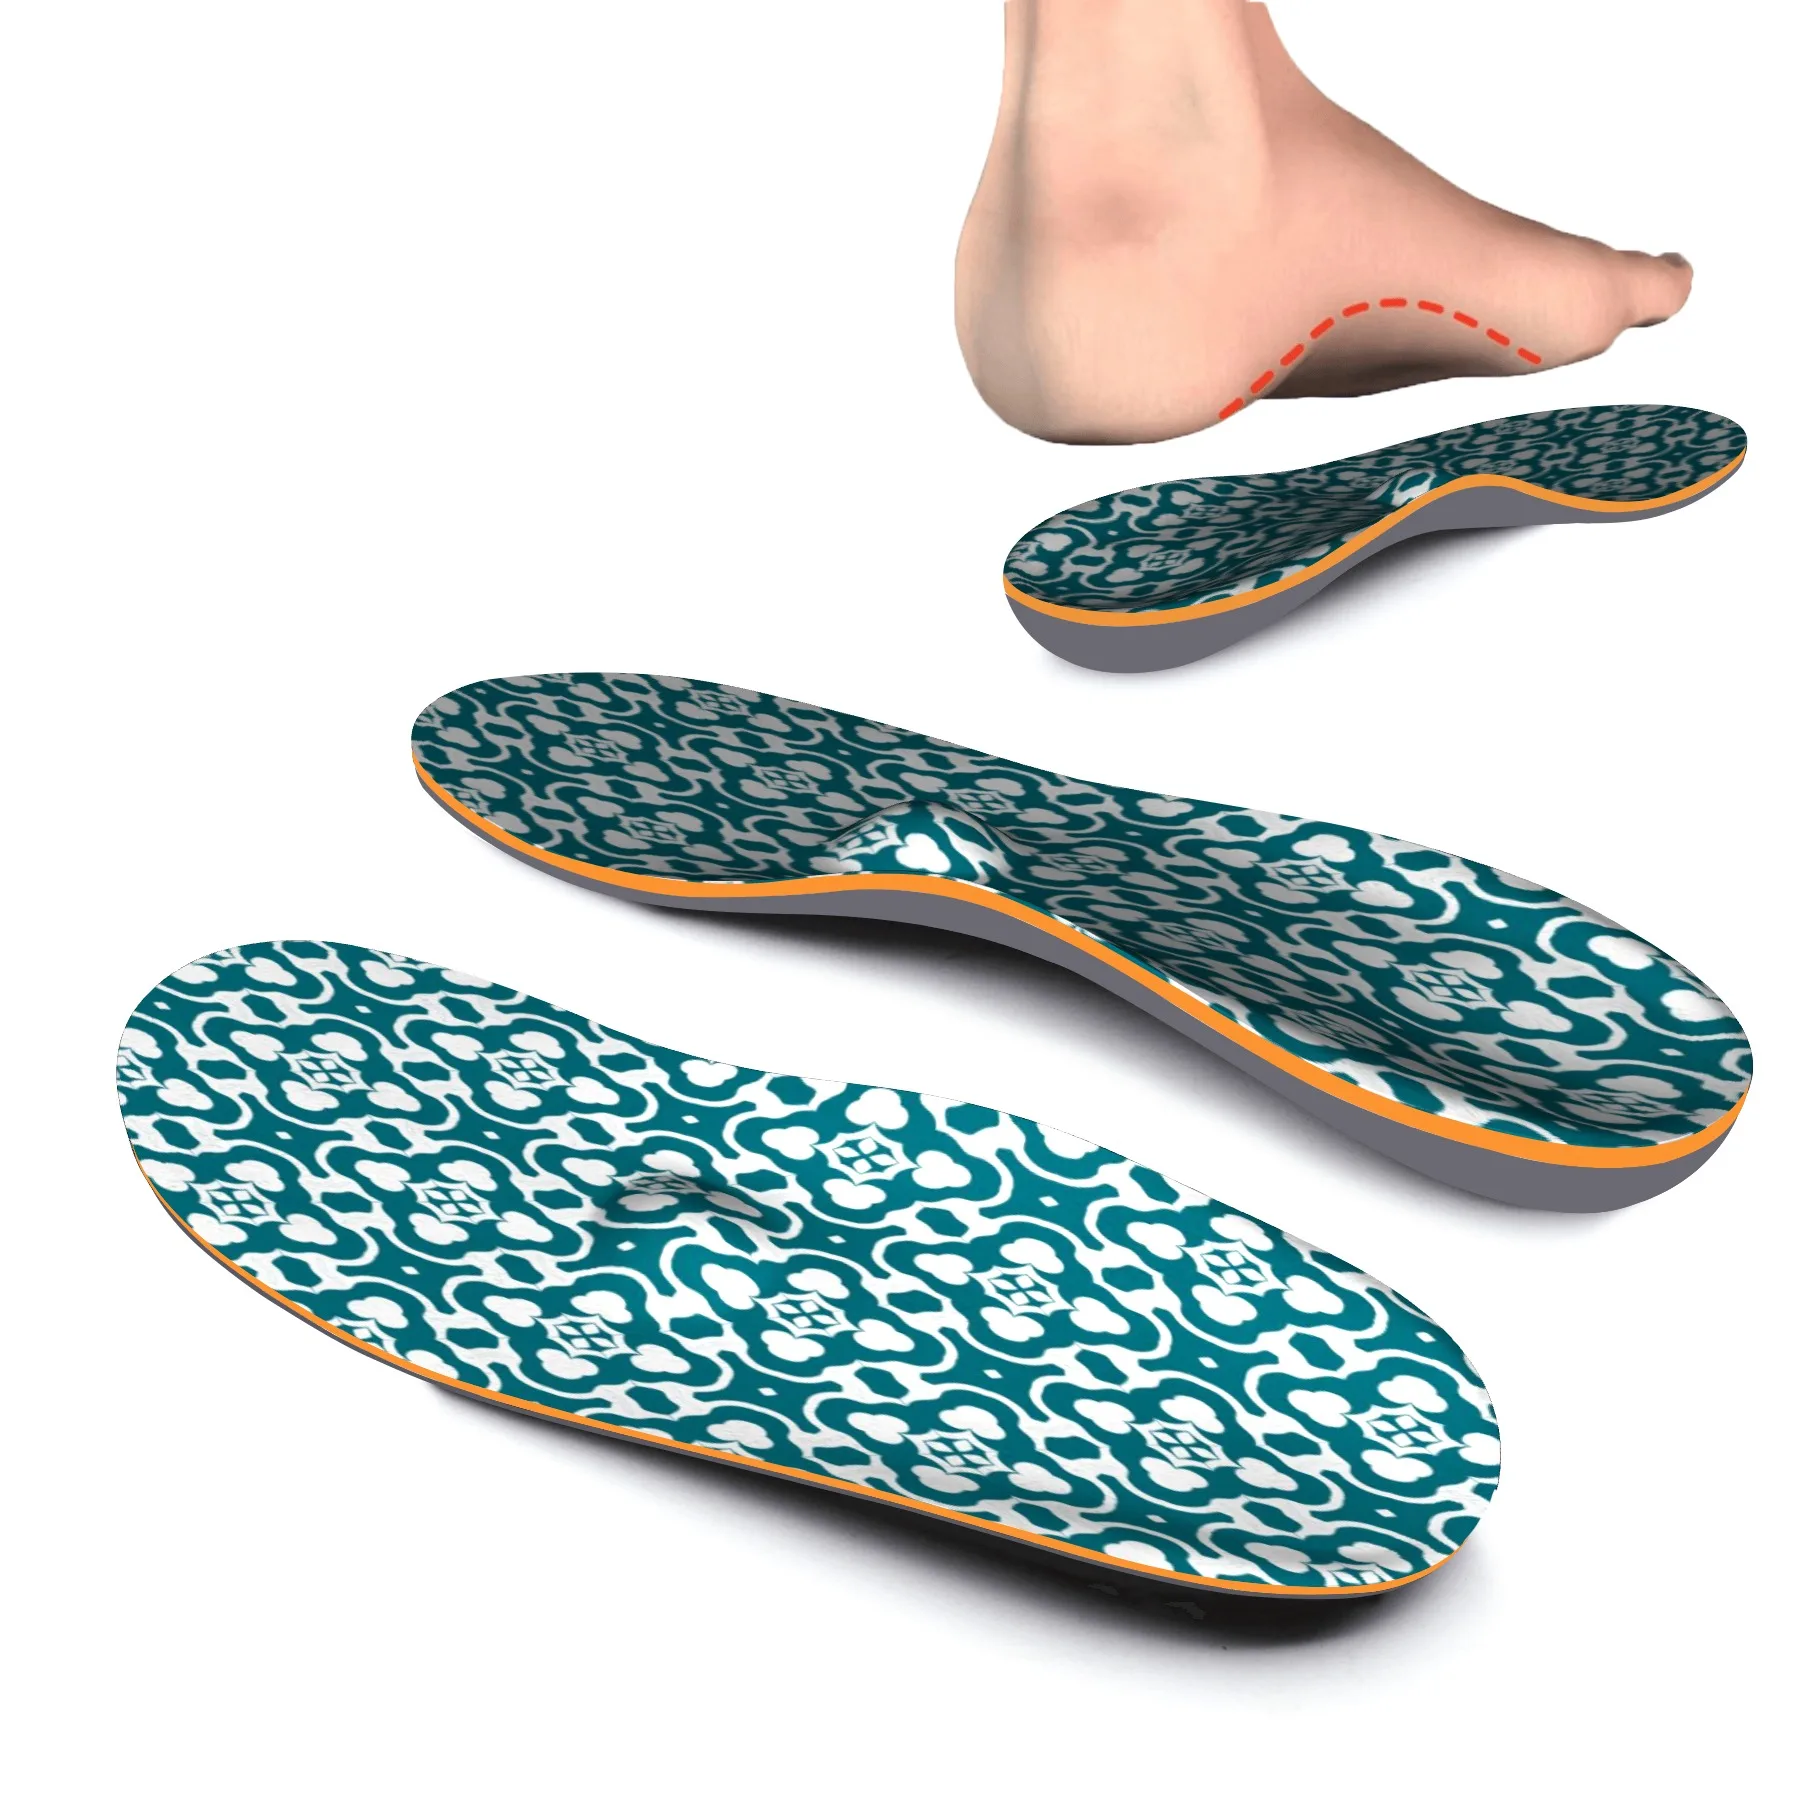 Plantar Fasciitis Flat Feet Orthopedic Insoles Cushion Men Heel Pain Spur Arch Metatarsal Support Orthotics Sneaker Inserts Sole